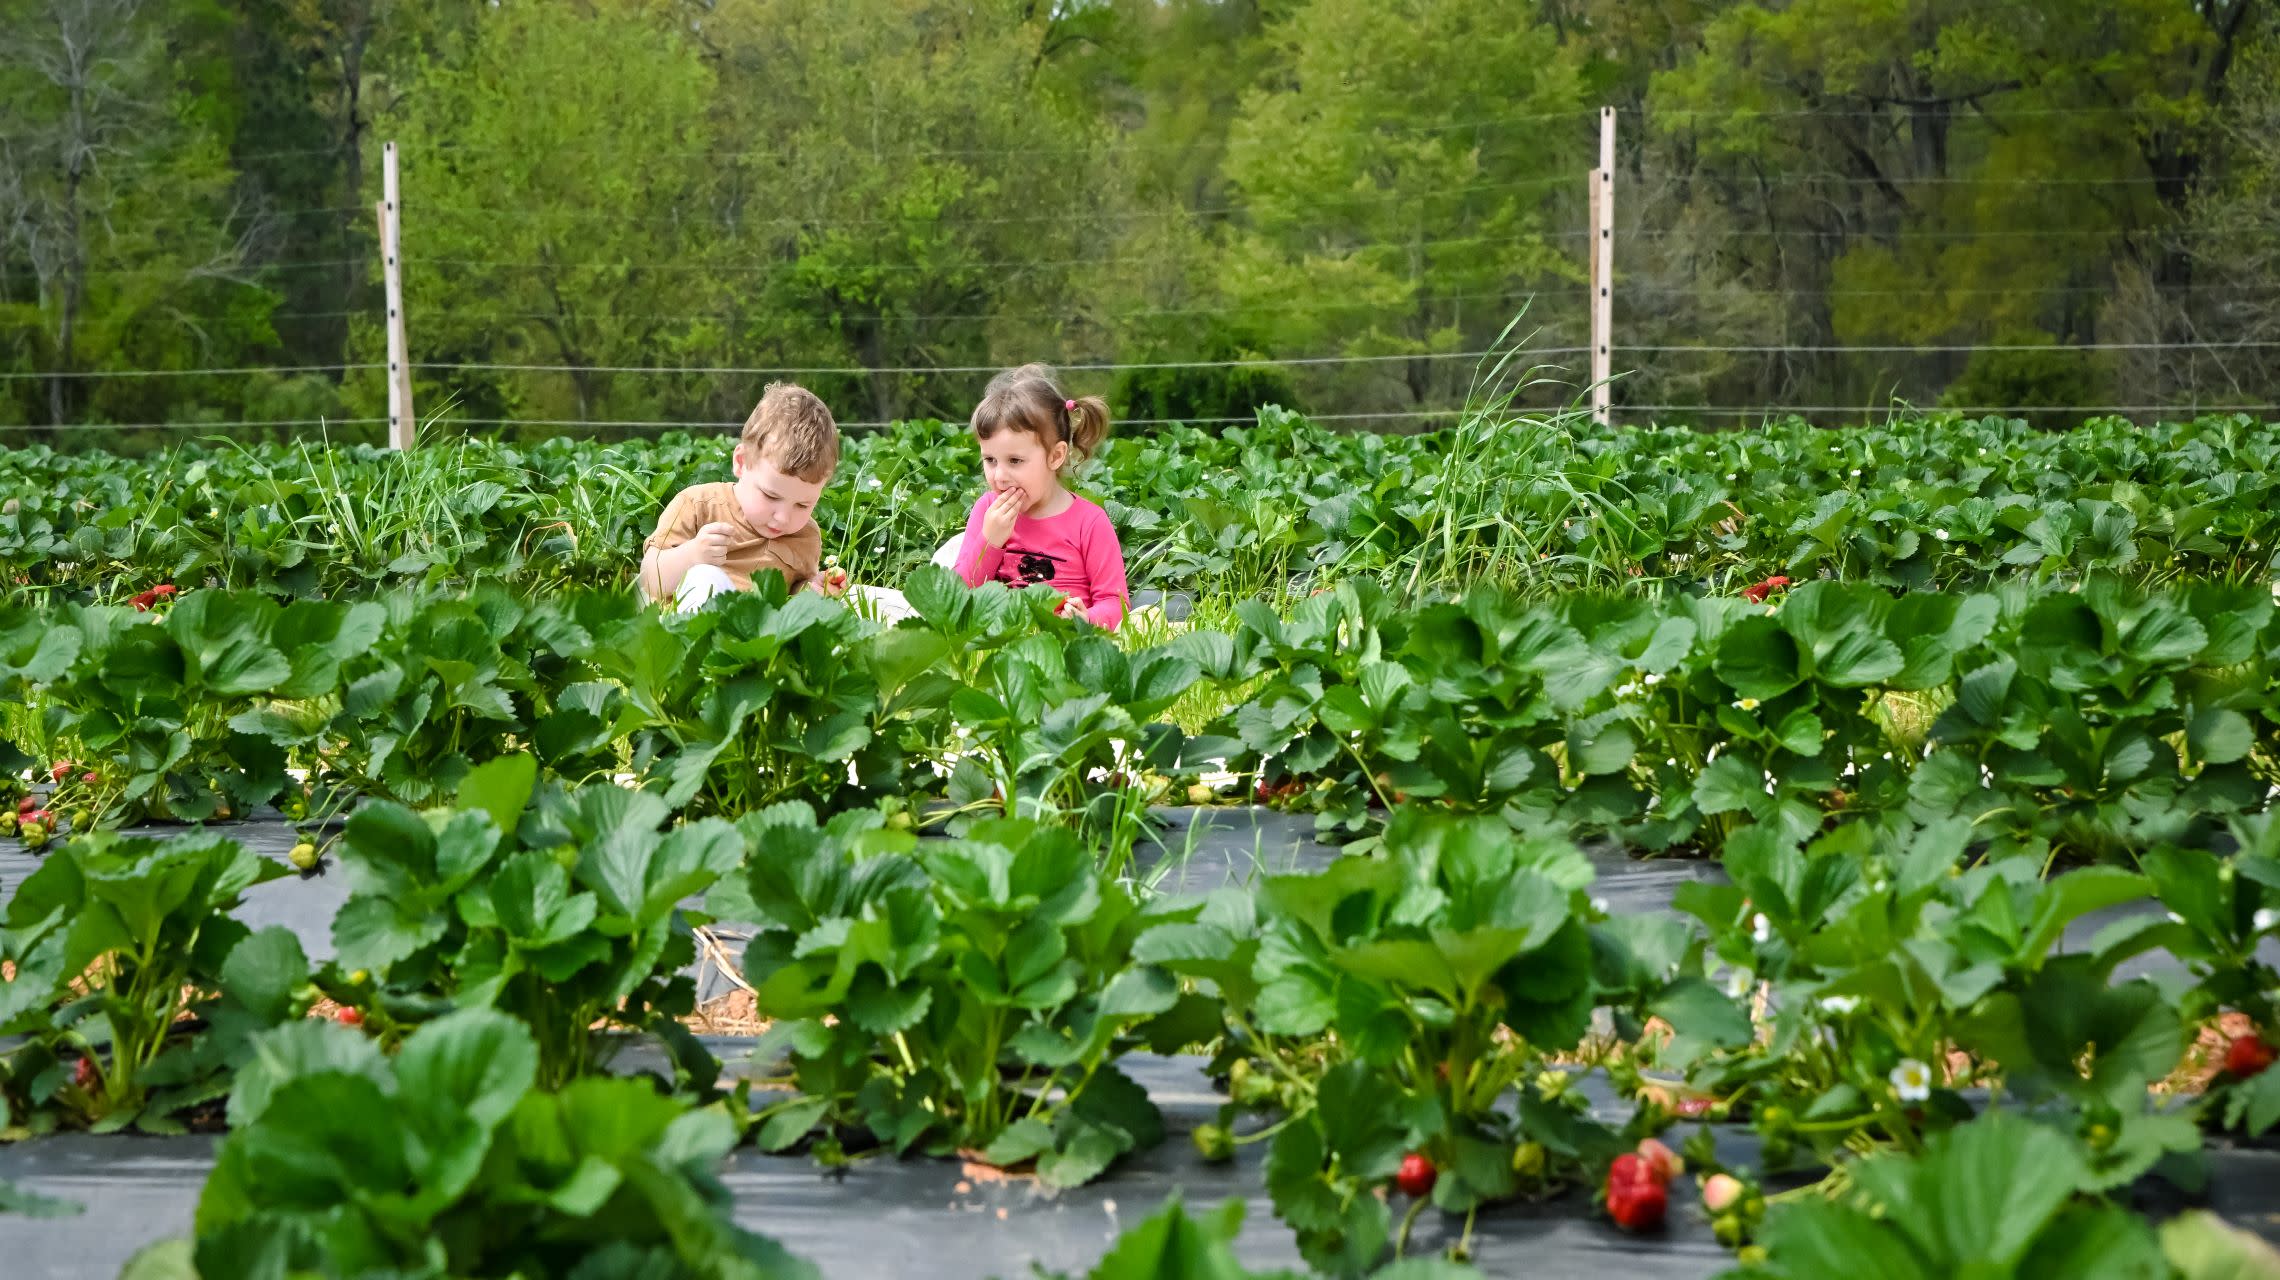 children eating strawberries in u-pick strawberry field